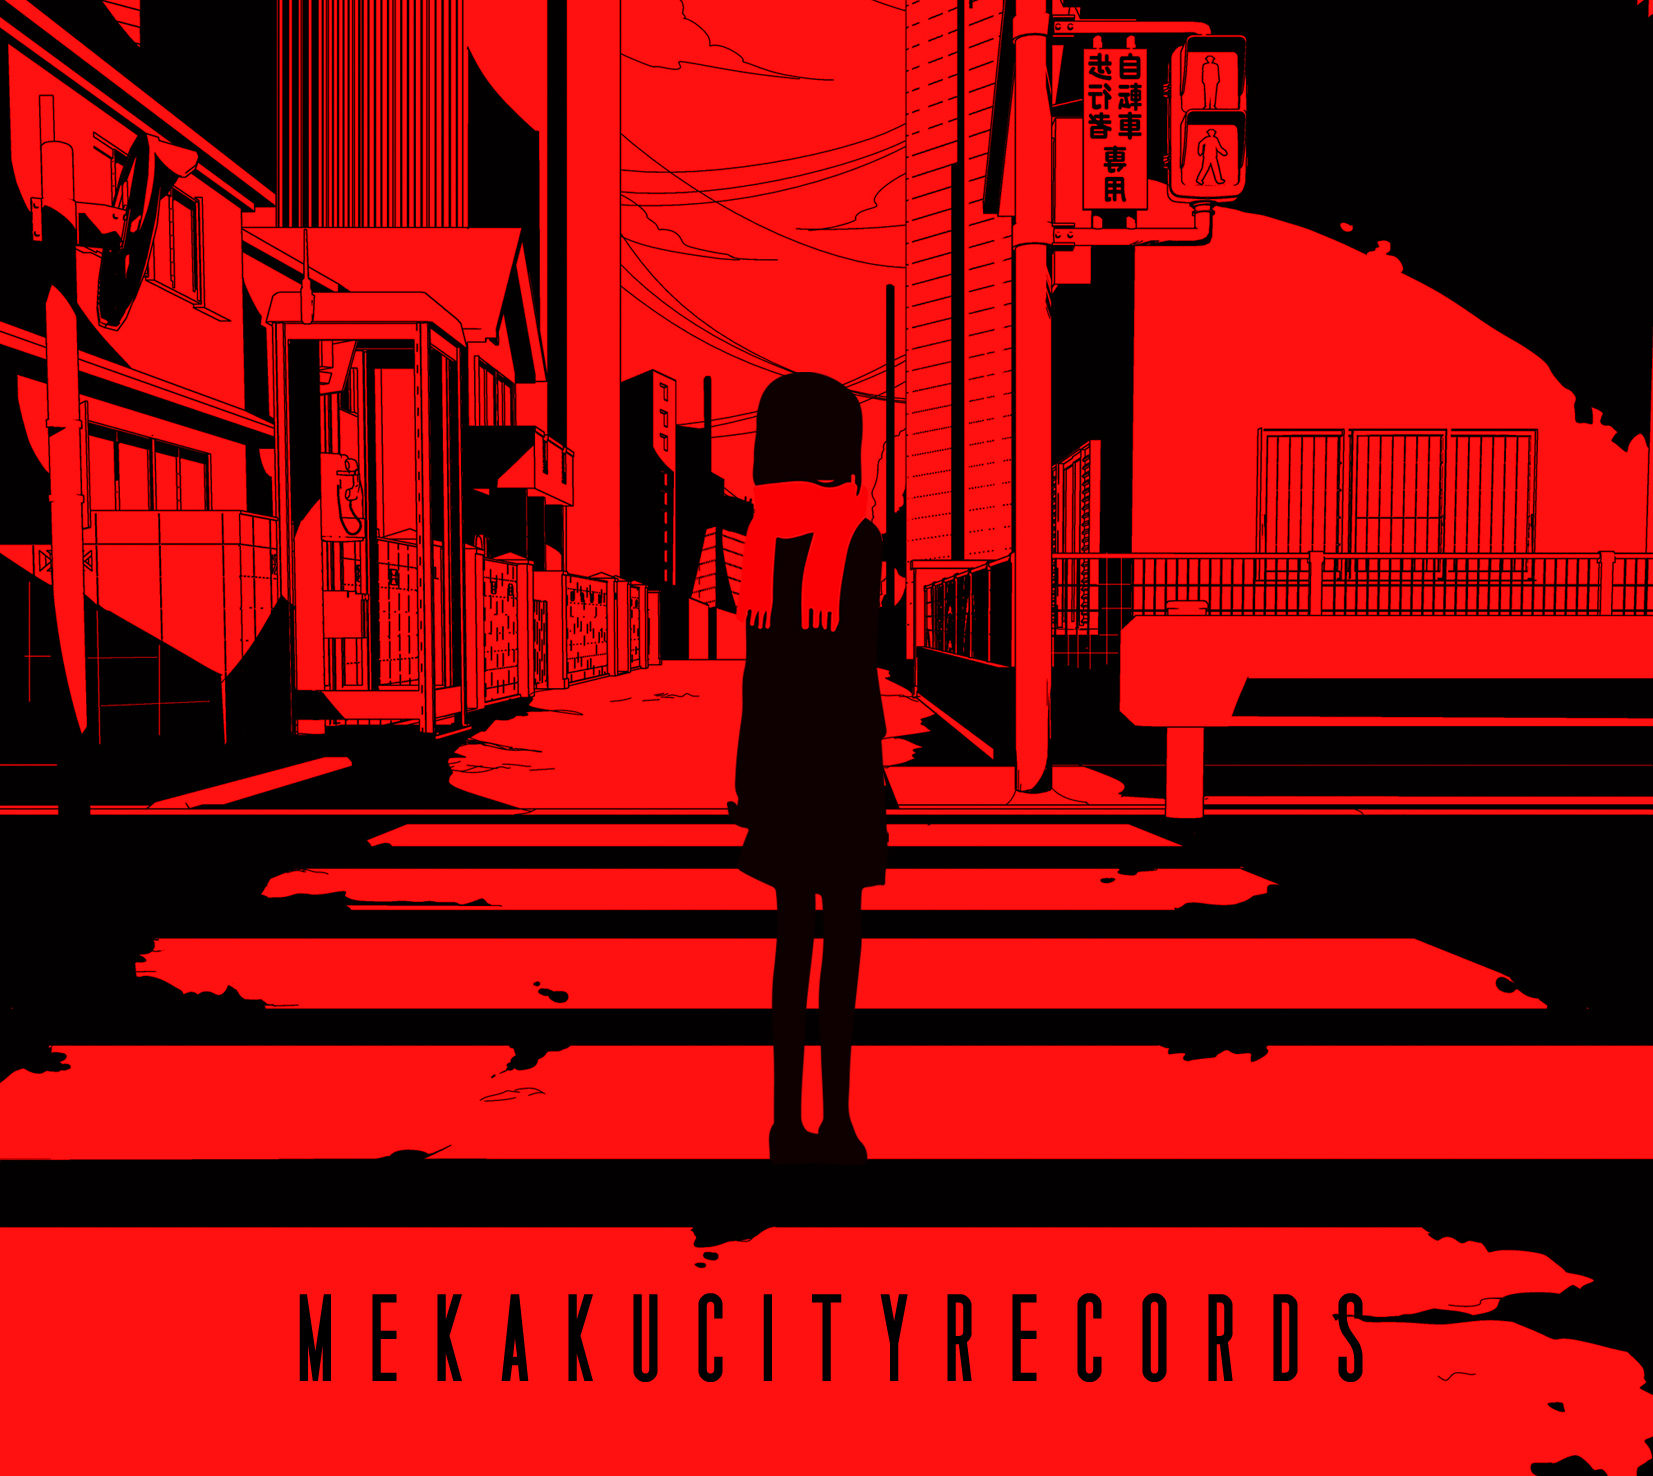 Mekakucity Records, Aniplex of America, anime And Manga Fandom, Kagerou  Project, crunchyroll, shaft, Vocaloid, actor, mangaka, Fan art